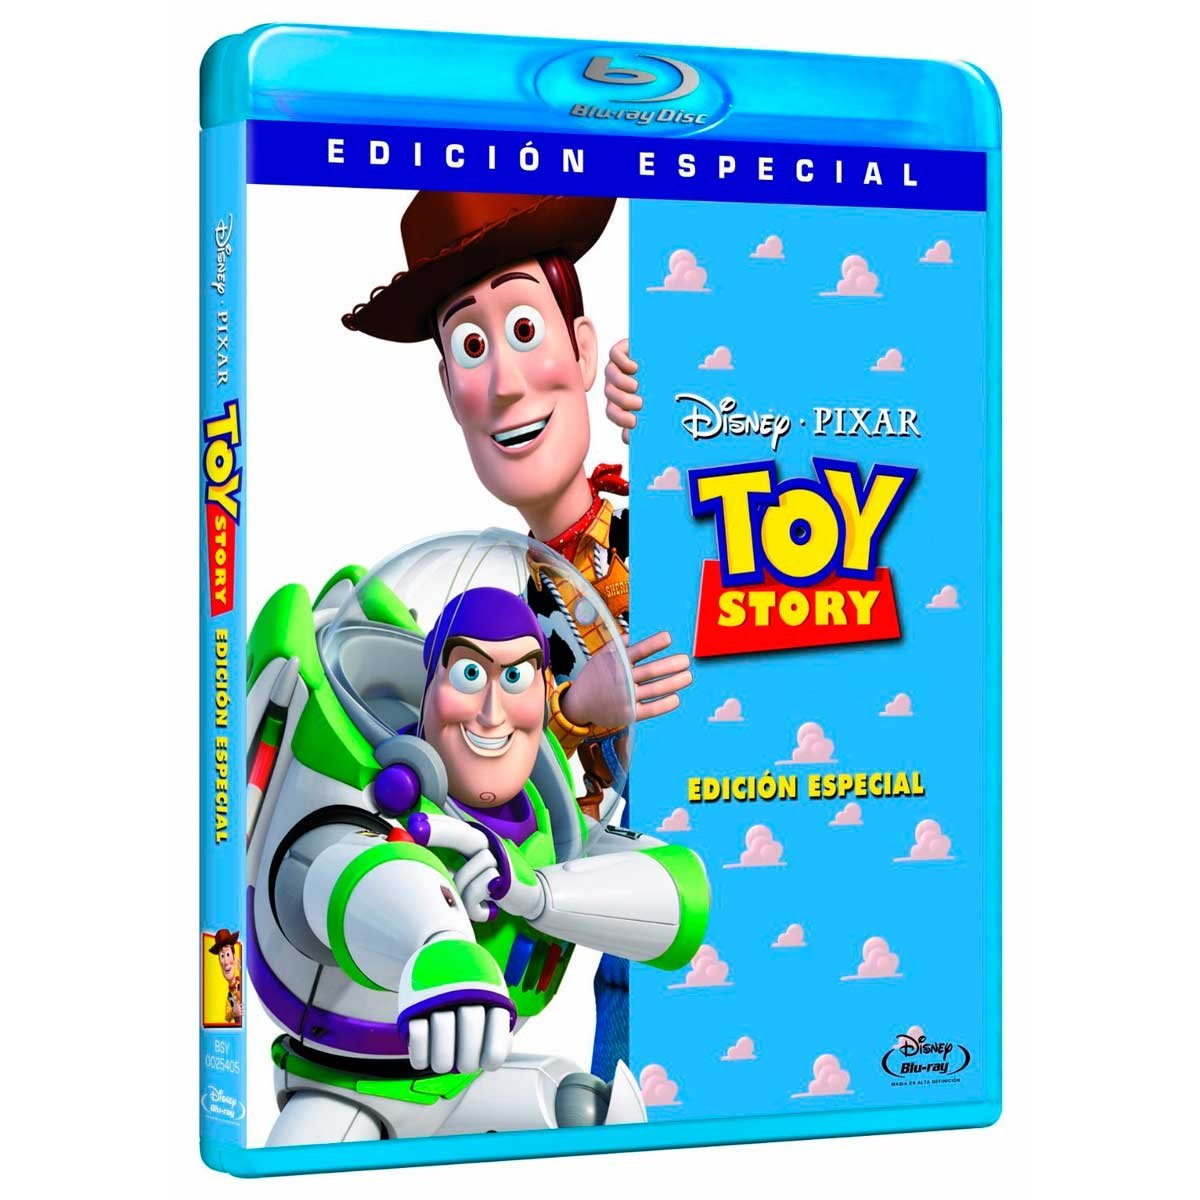 Blu Ray Toy Story